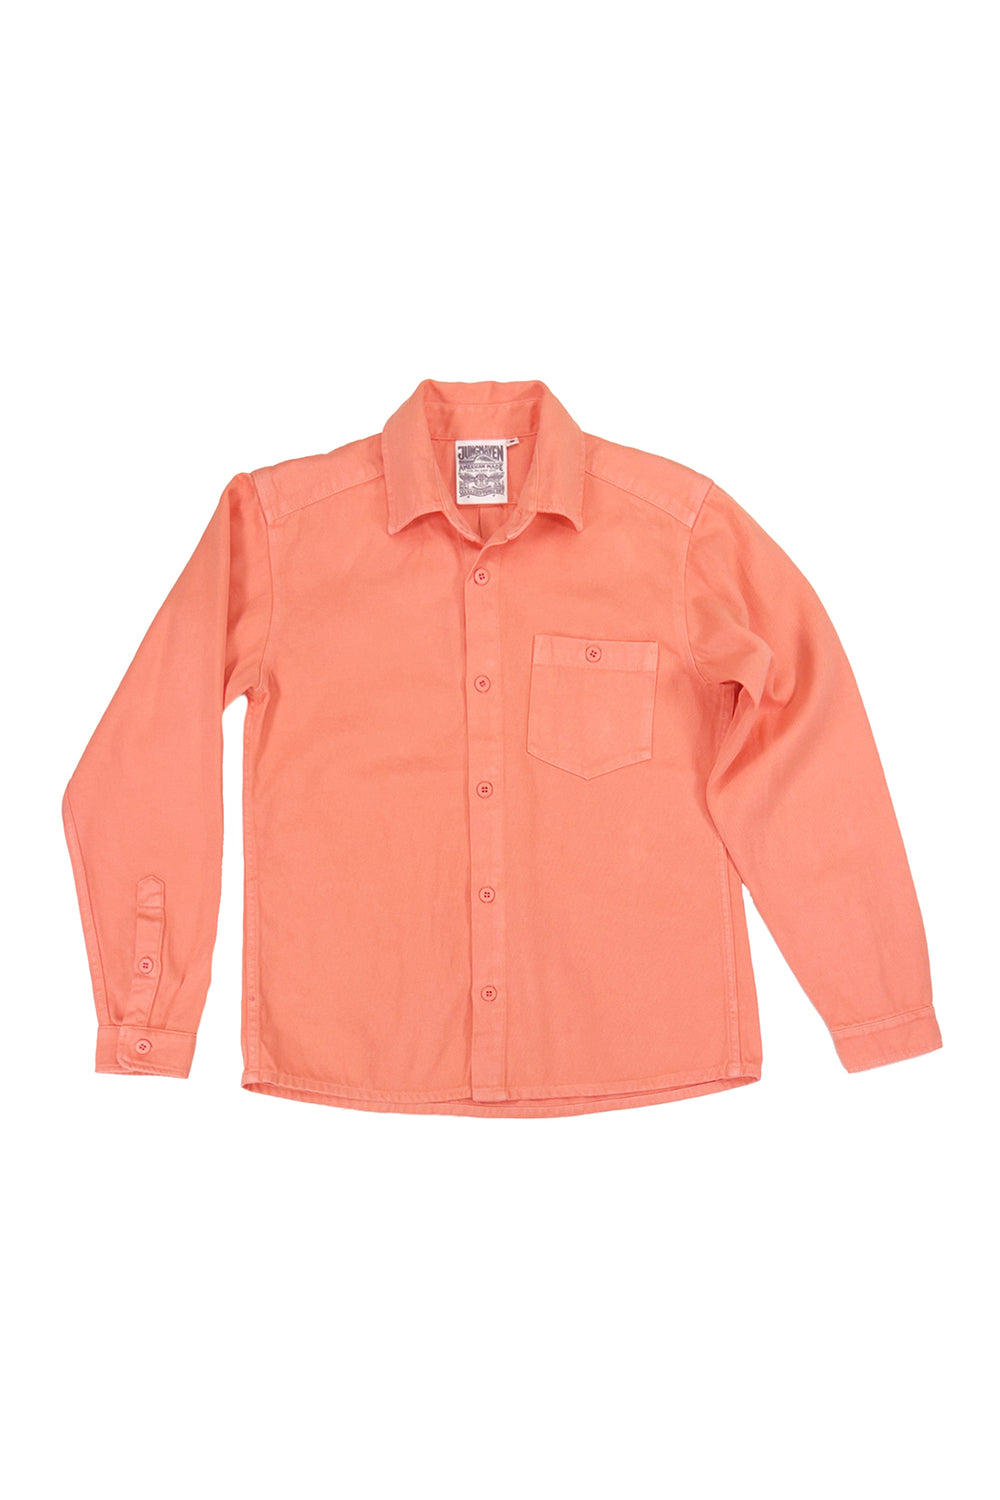 Topanga Shirt - Sale Colors | Jungmaven Hemp Clothing & Accessories / Color: Pink Salmon